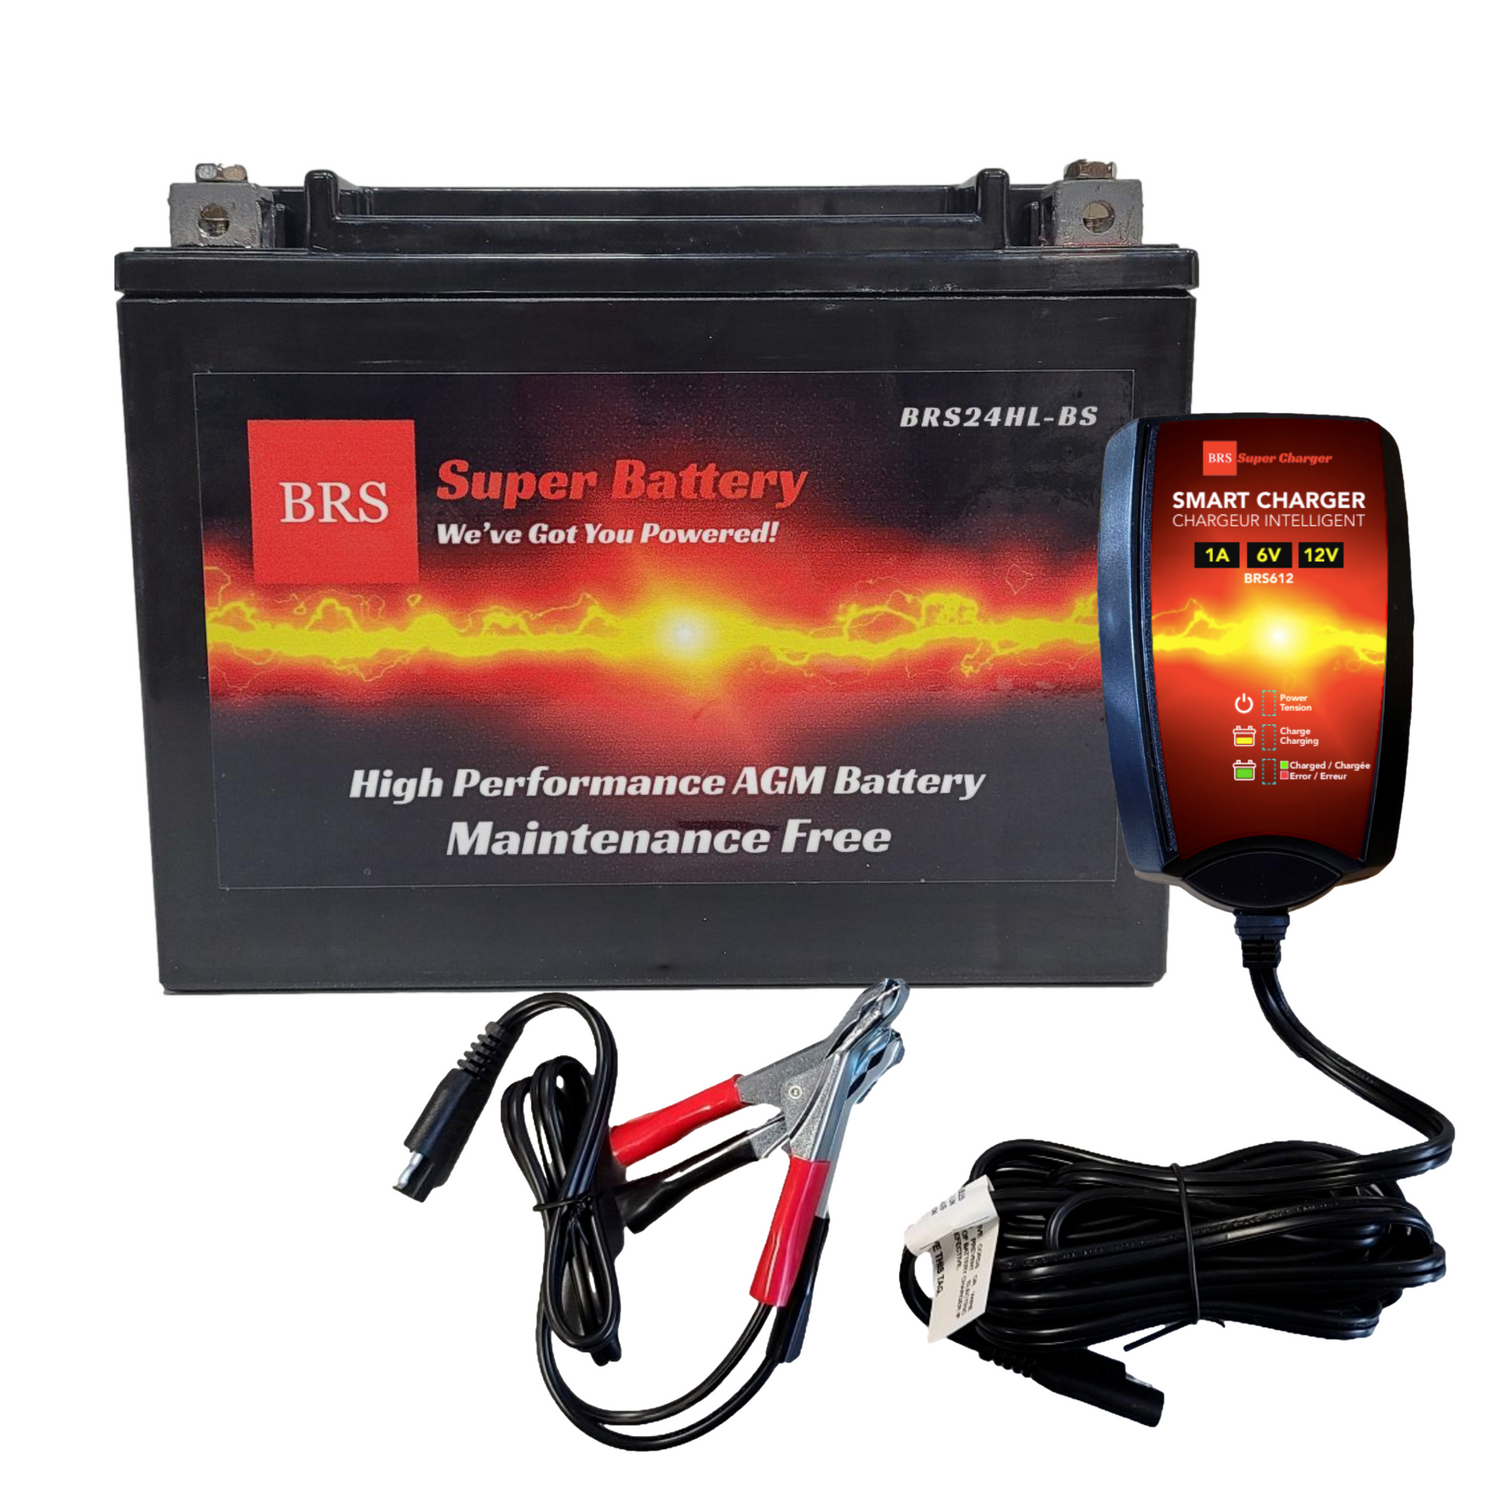 BRS24HL-BS 30 Day Warranty Battery & Smart Charger / Maintainer Combo Bundle Kit - BRS Super Battery